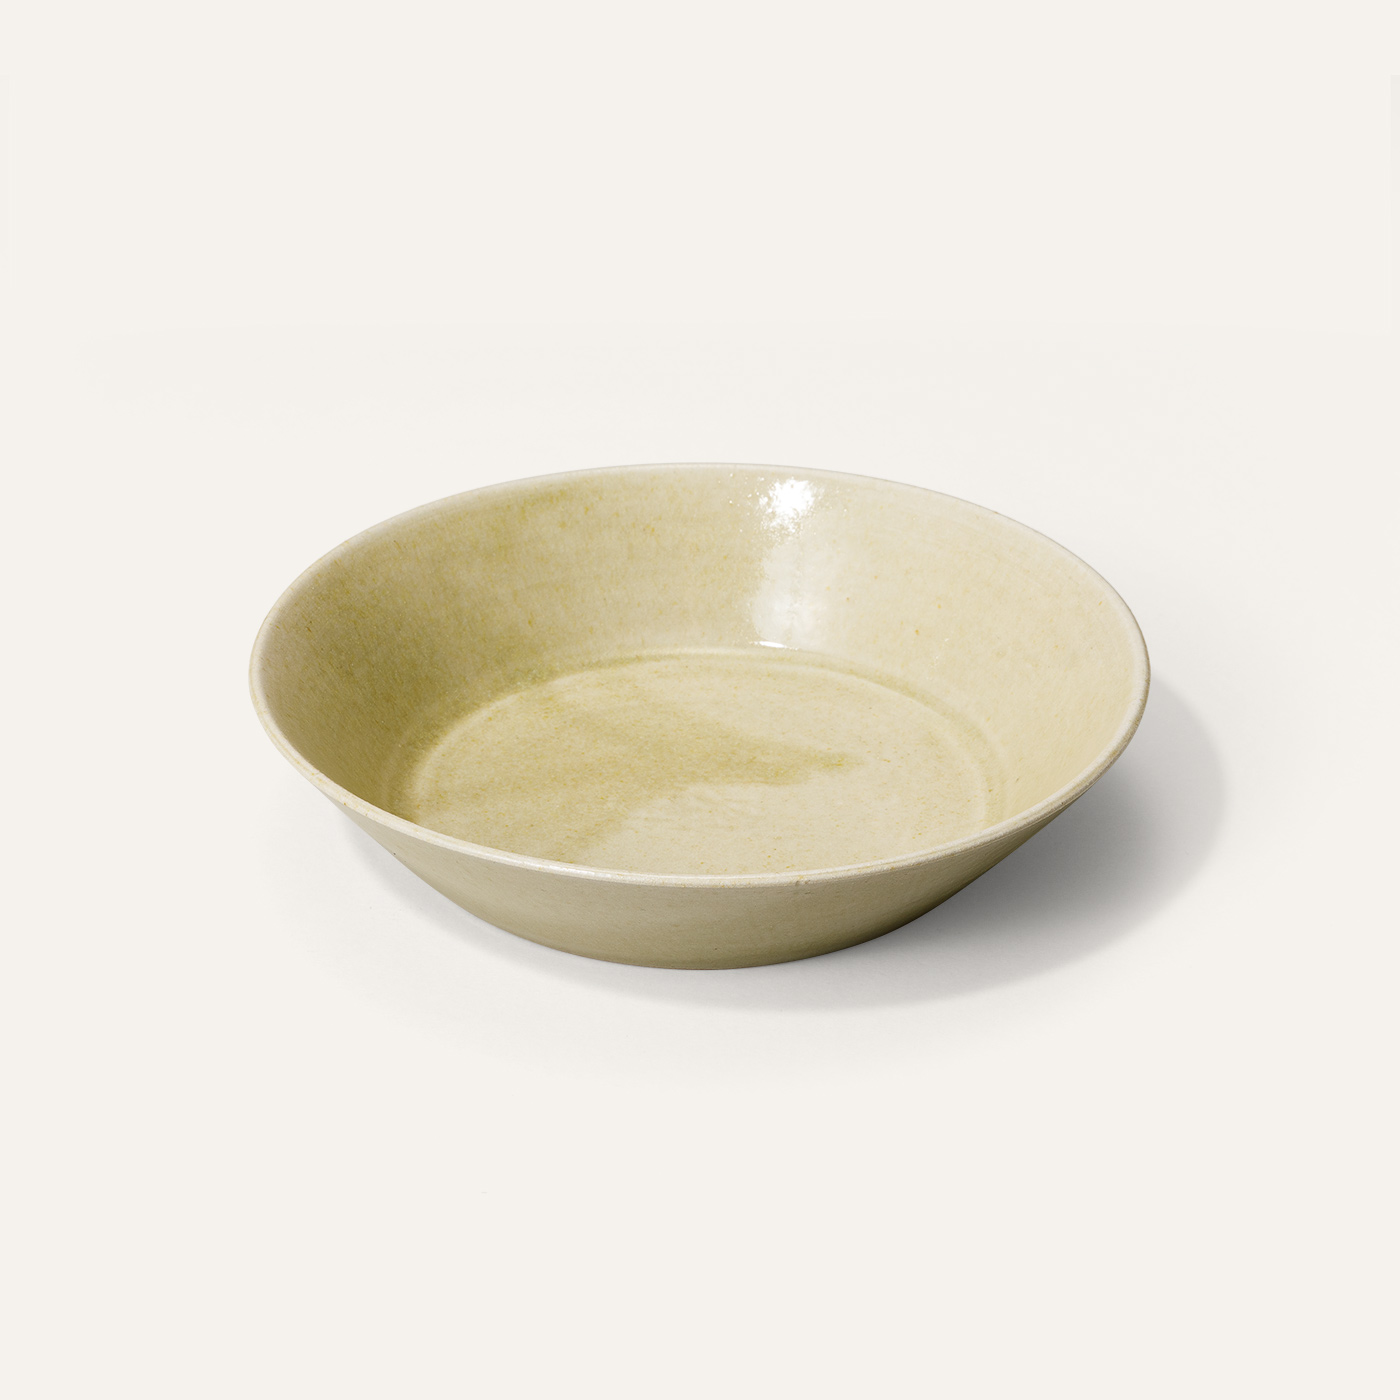 shallow bowl gray